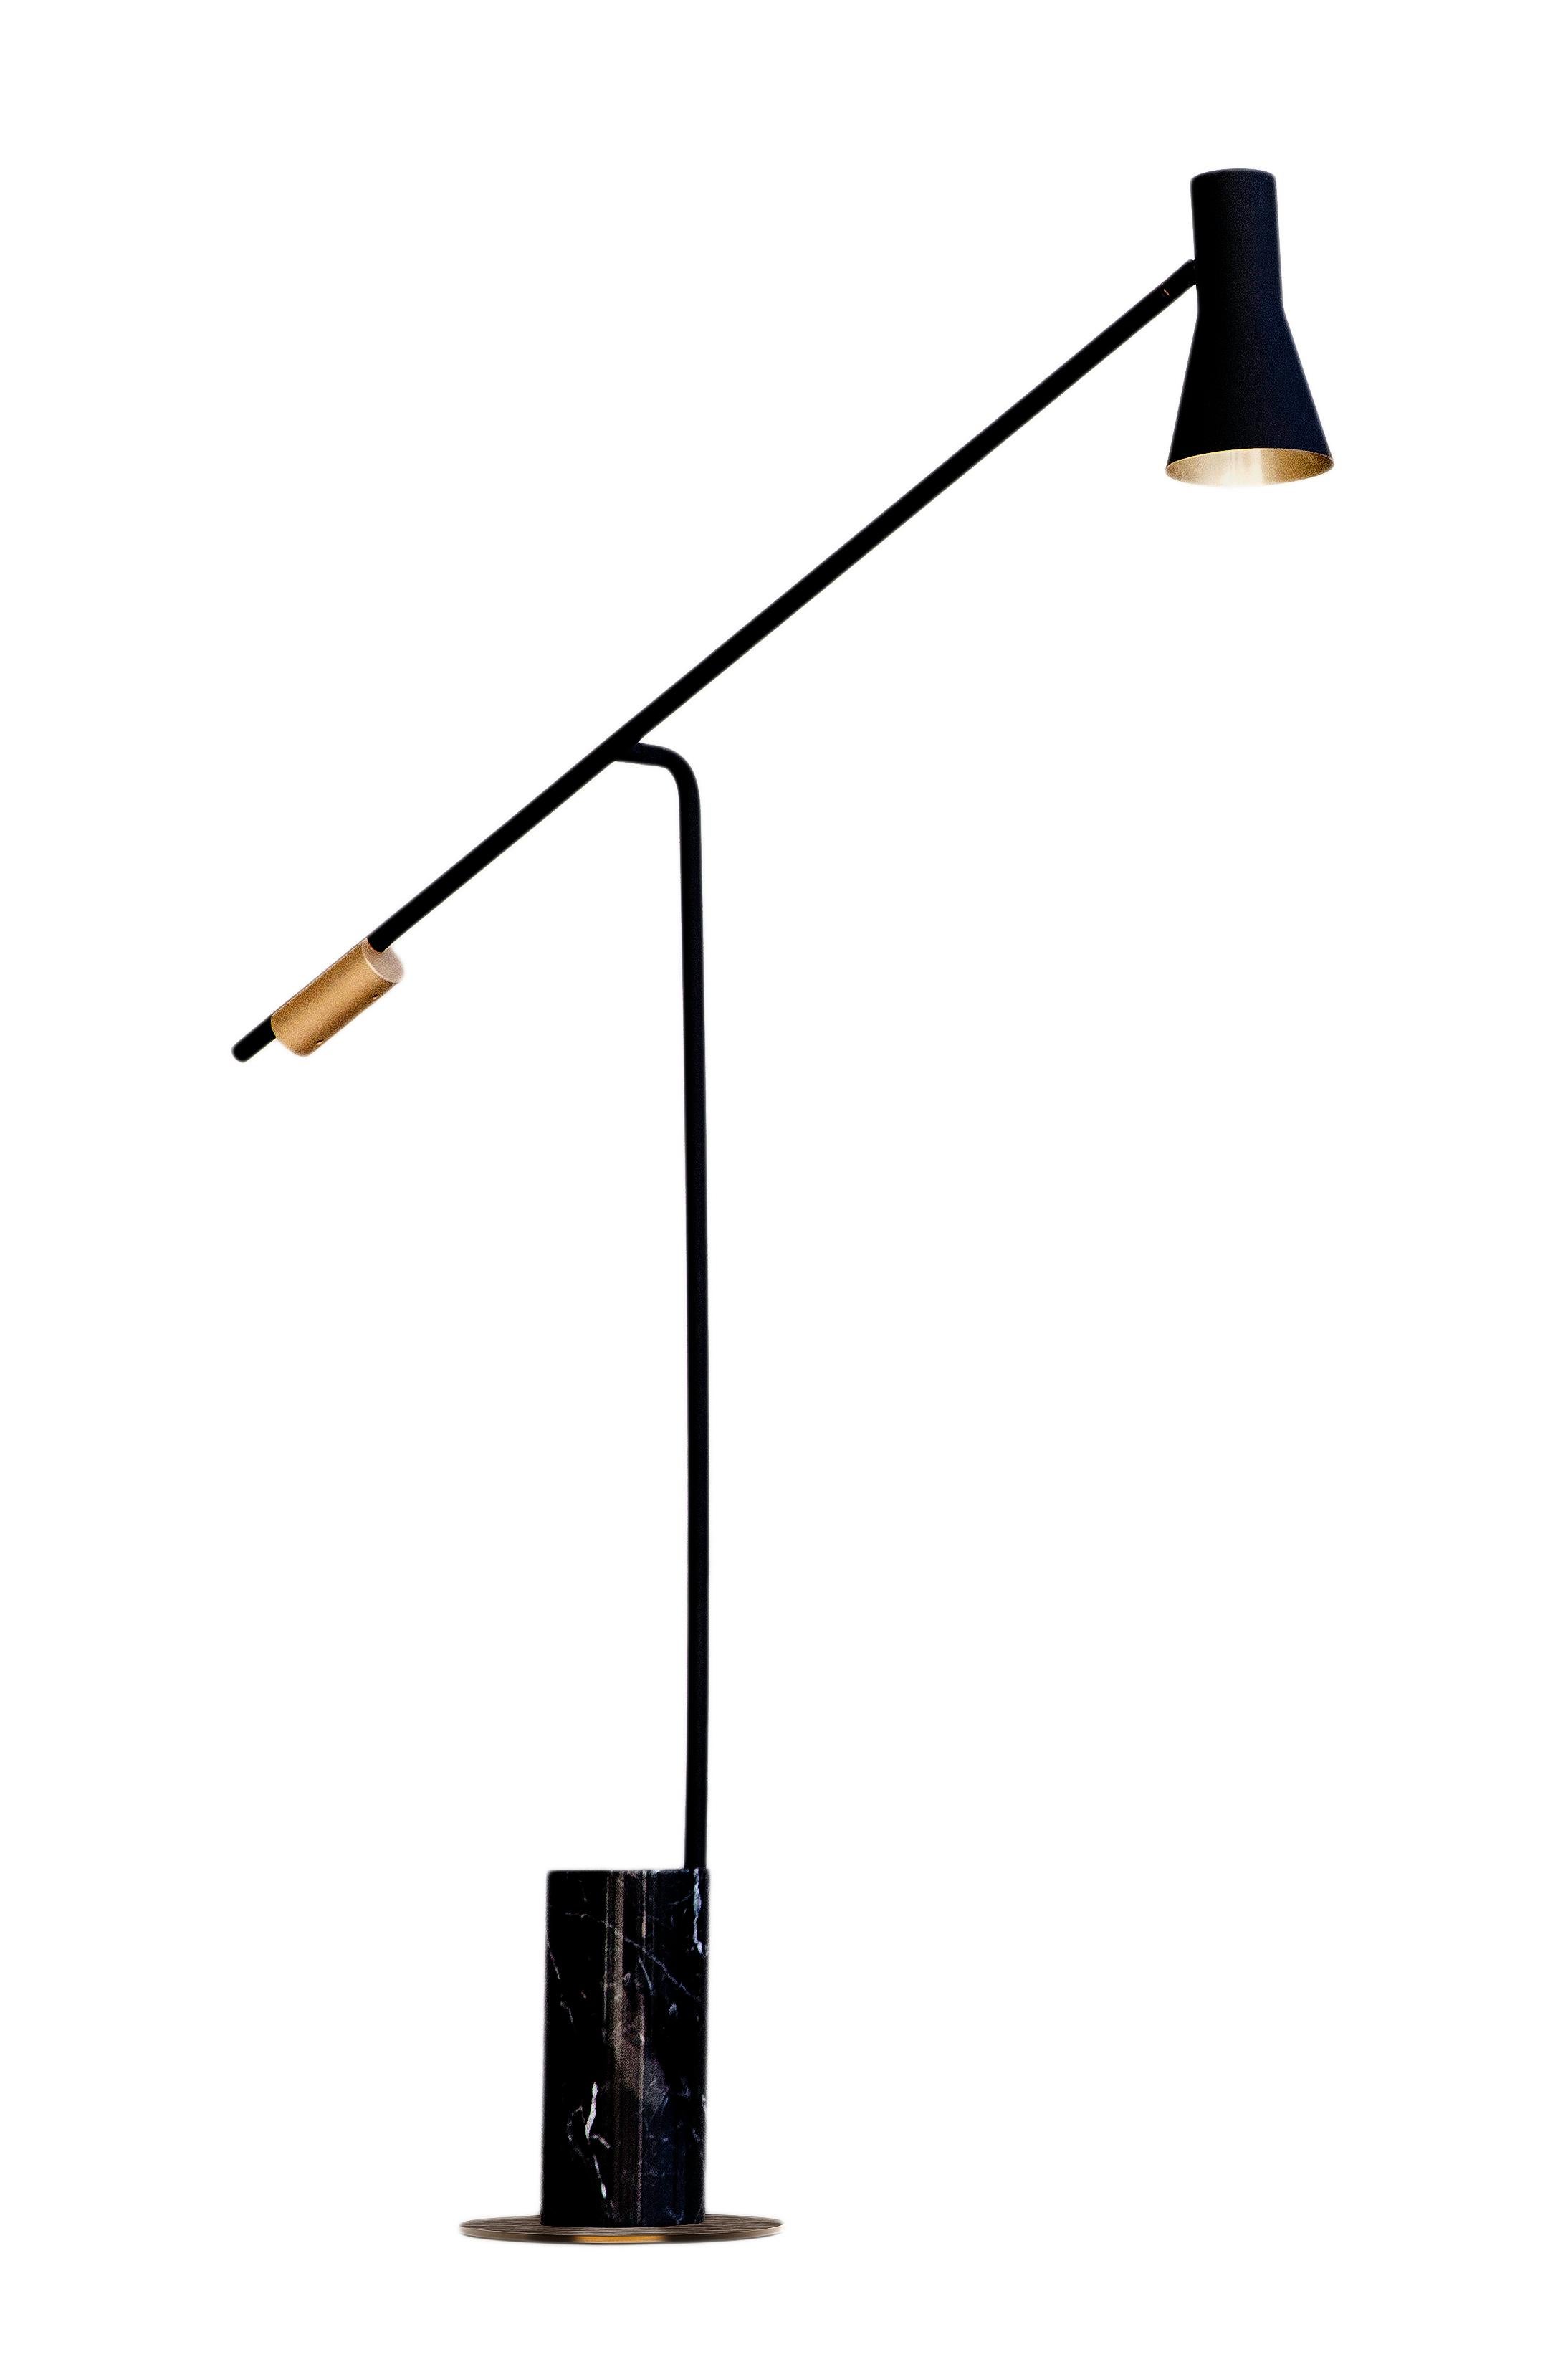 Powder-Coated Lutz Floor Lamp For Sale